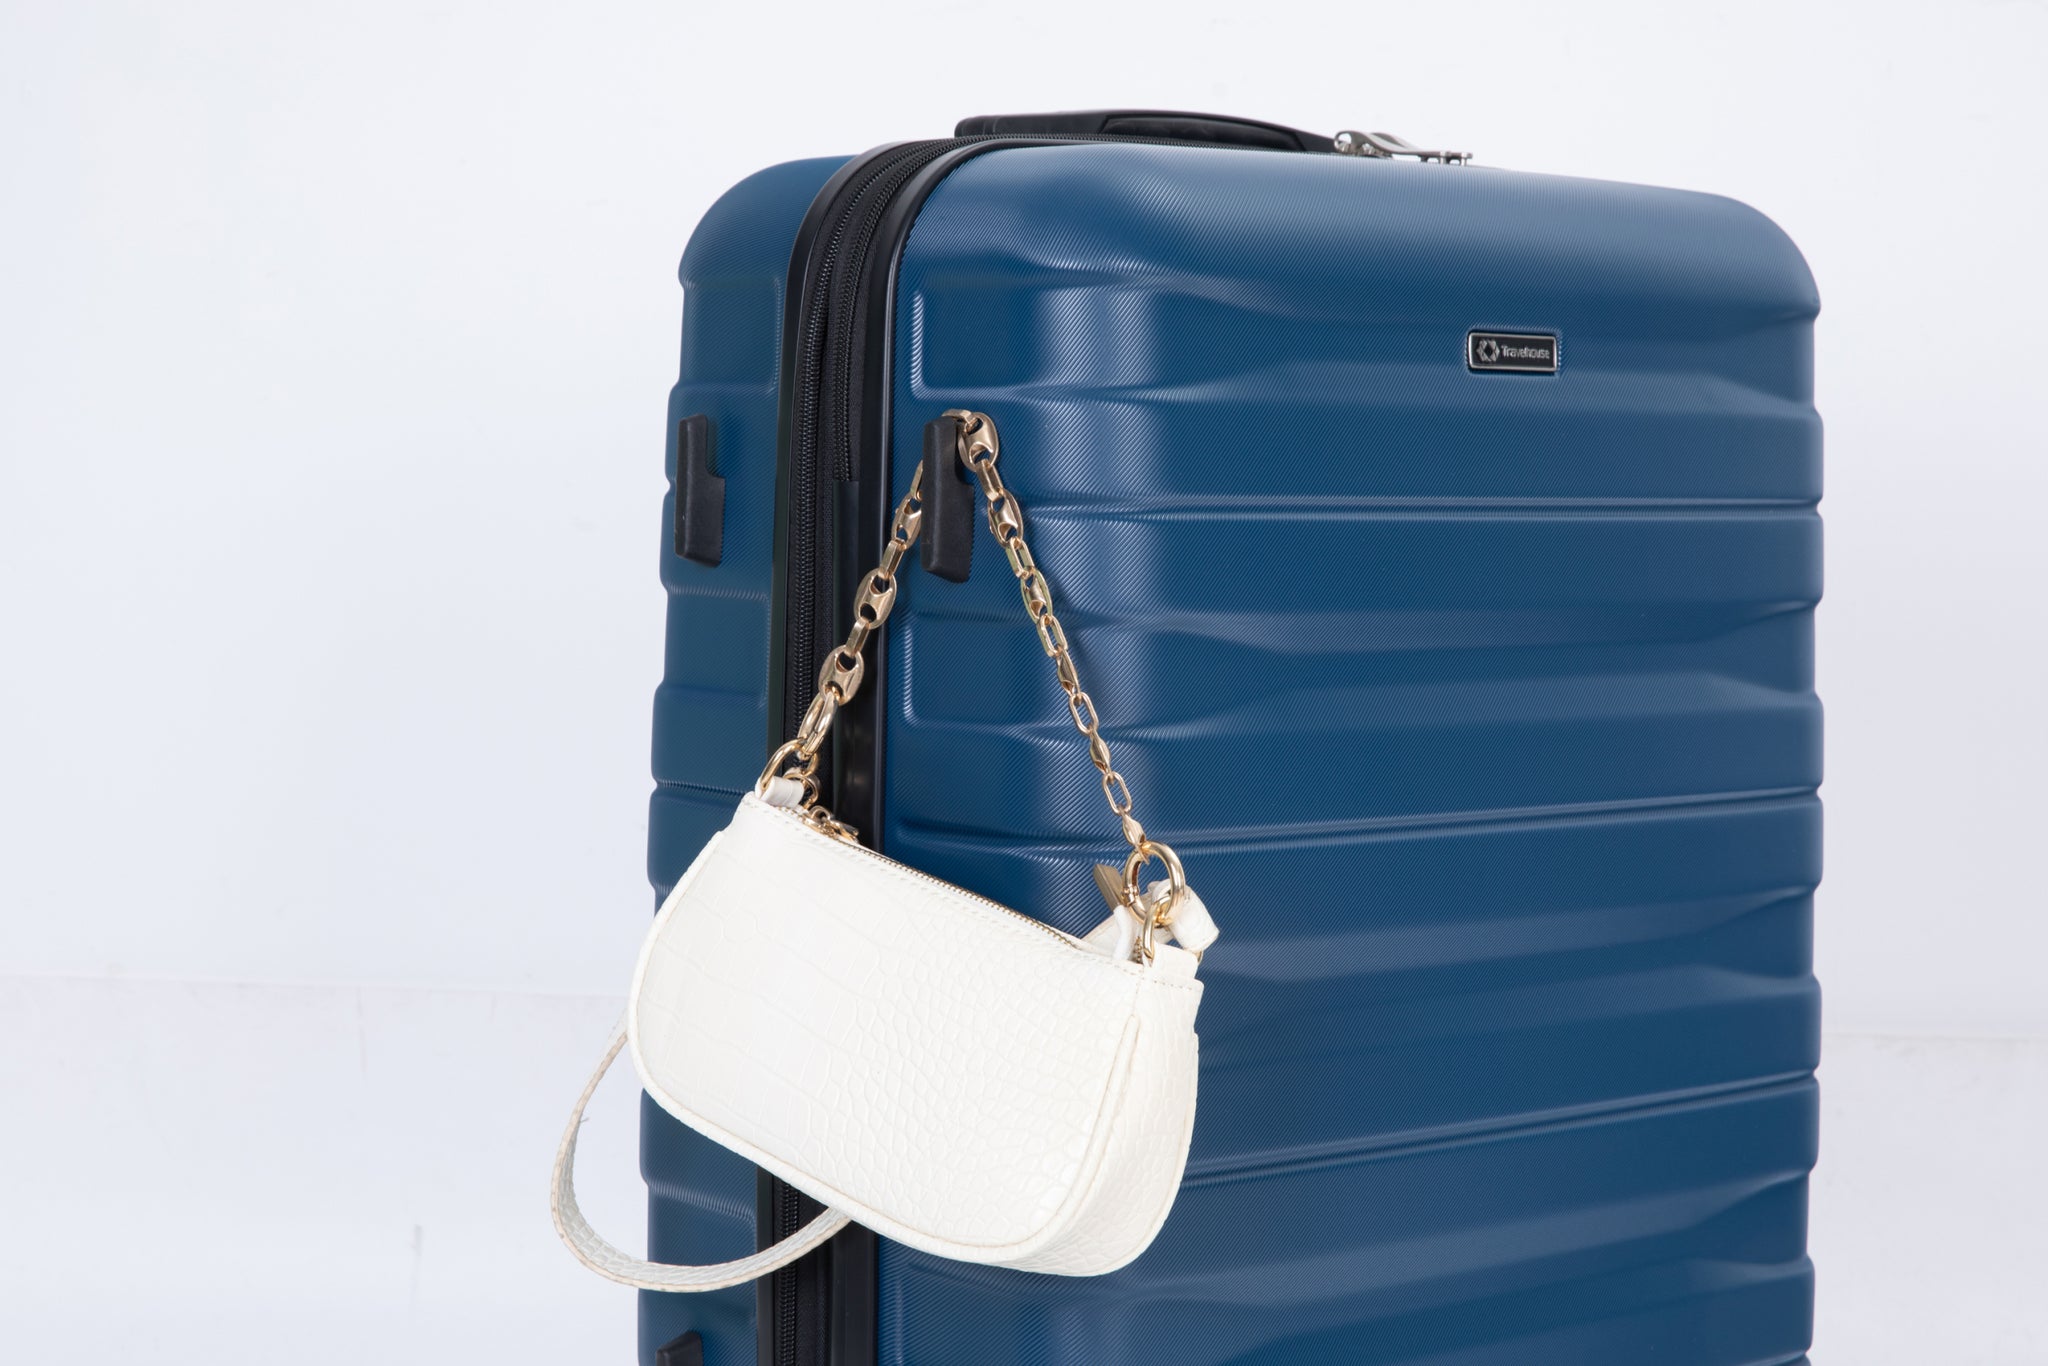 3 Piece Luggage Sets PC Lightweight & Durable dark blue-pc